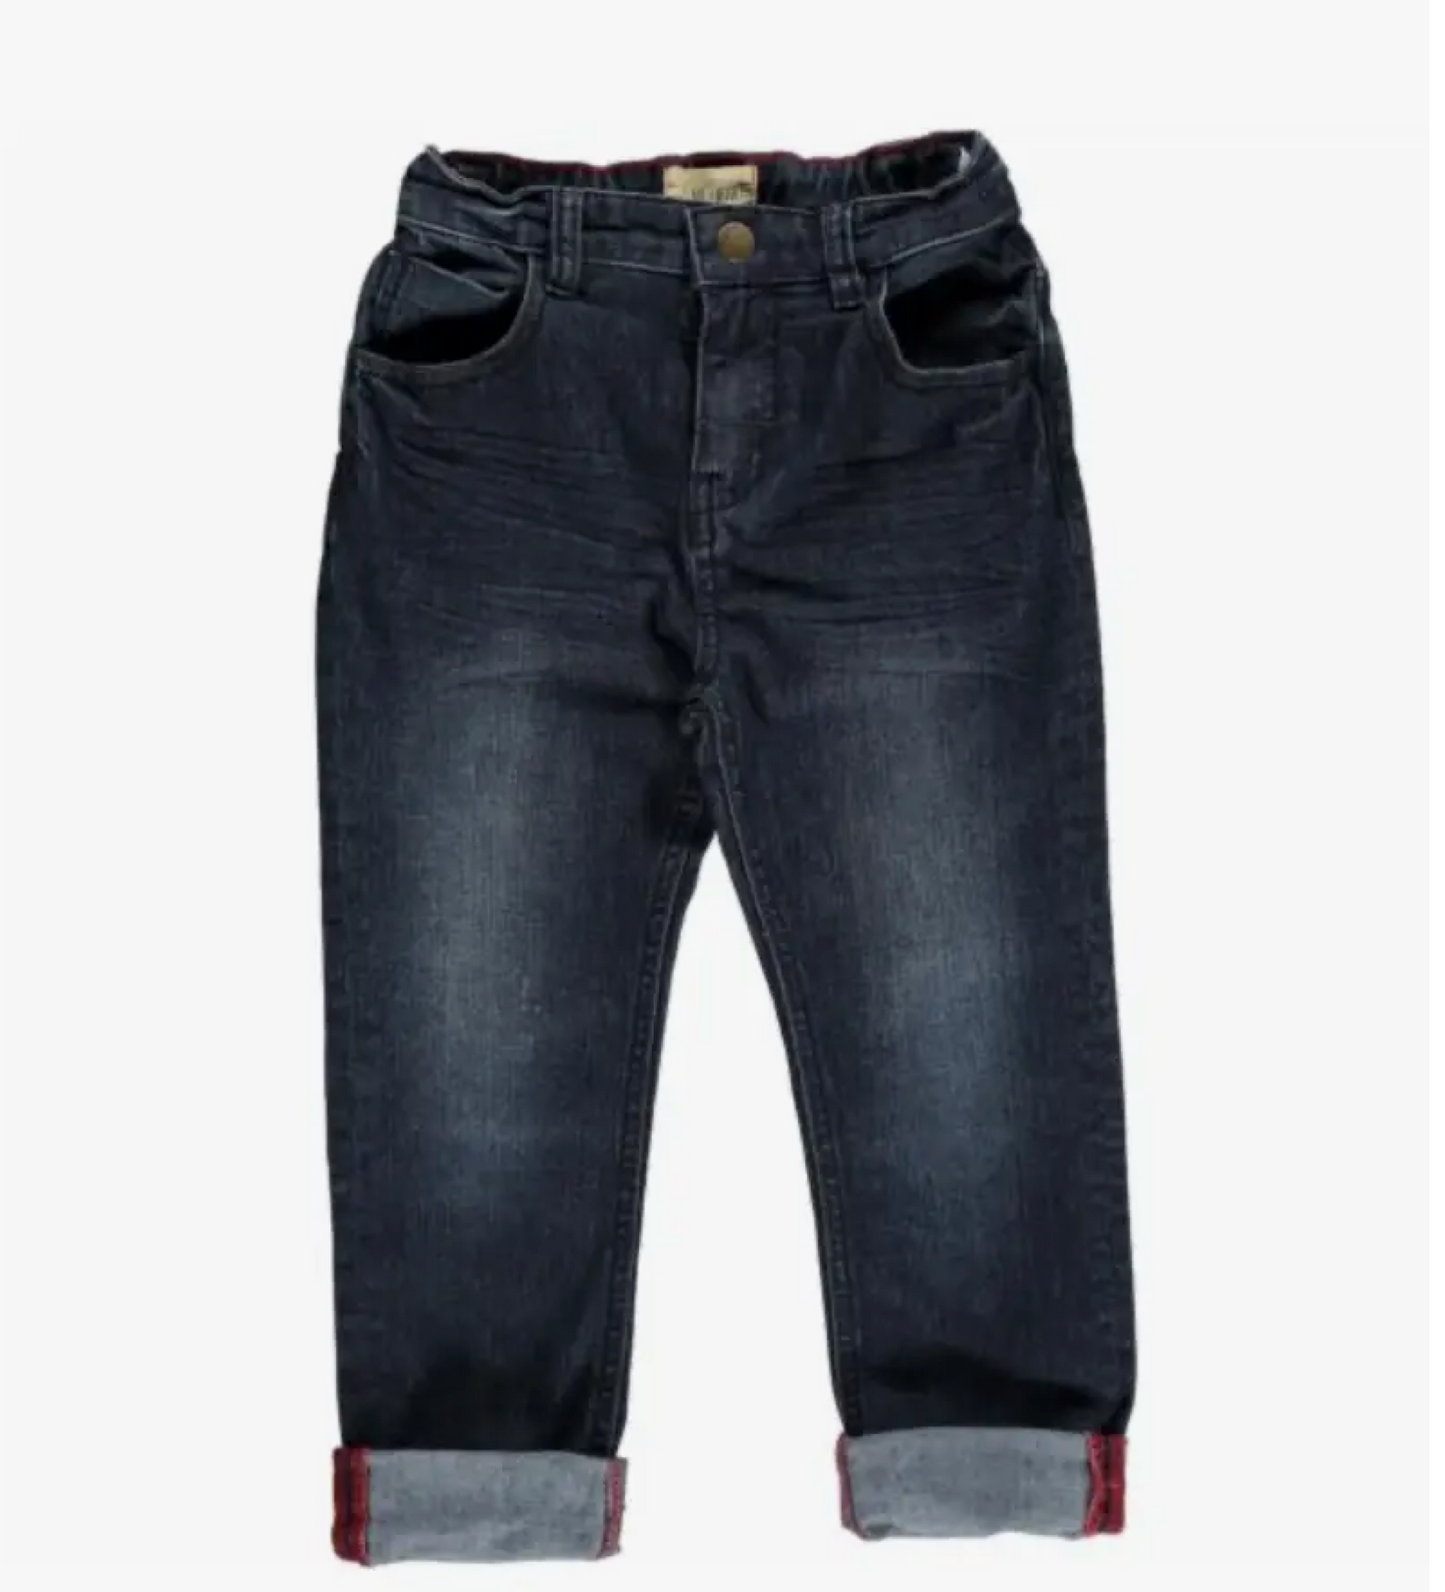 Mark Navy Denim Jeans